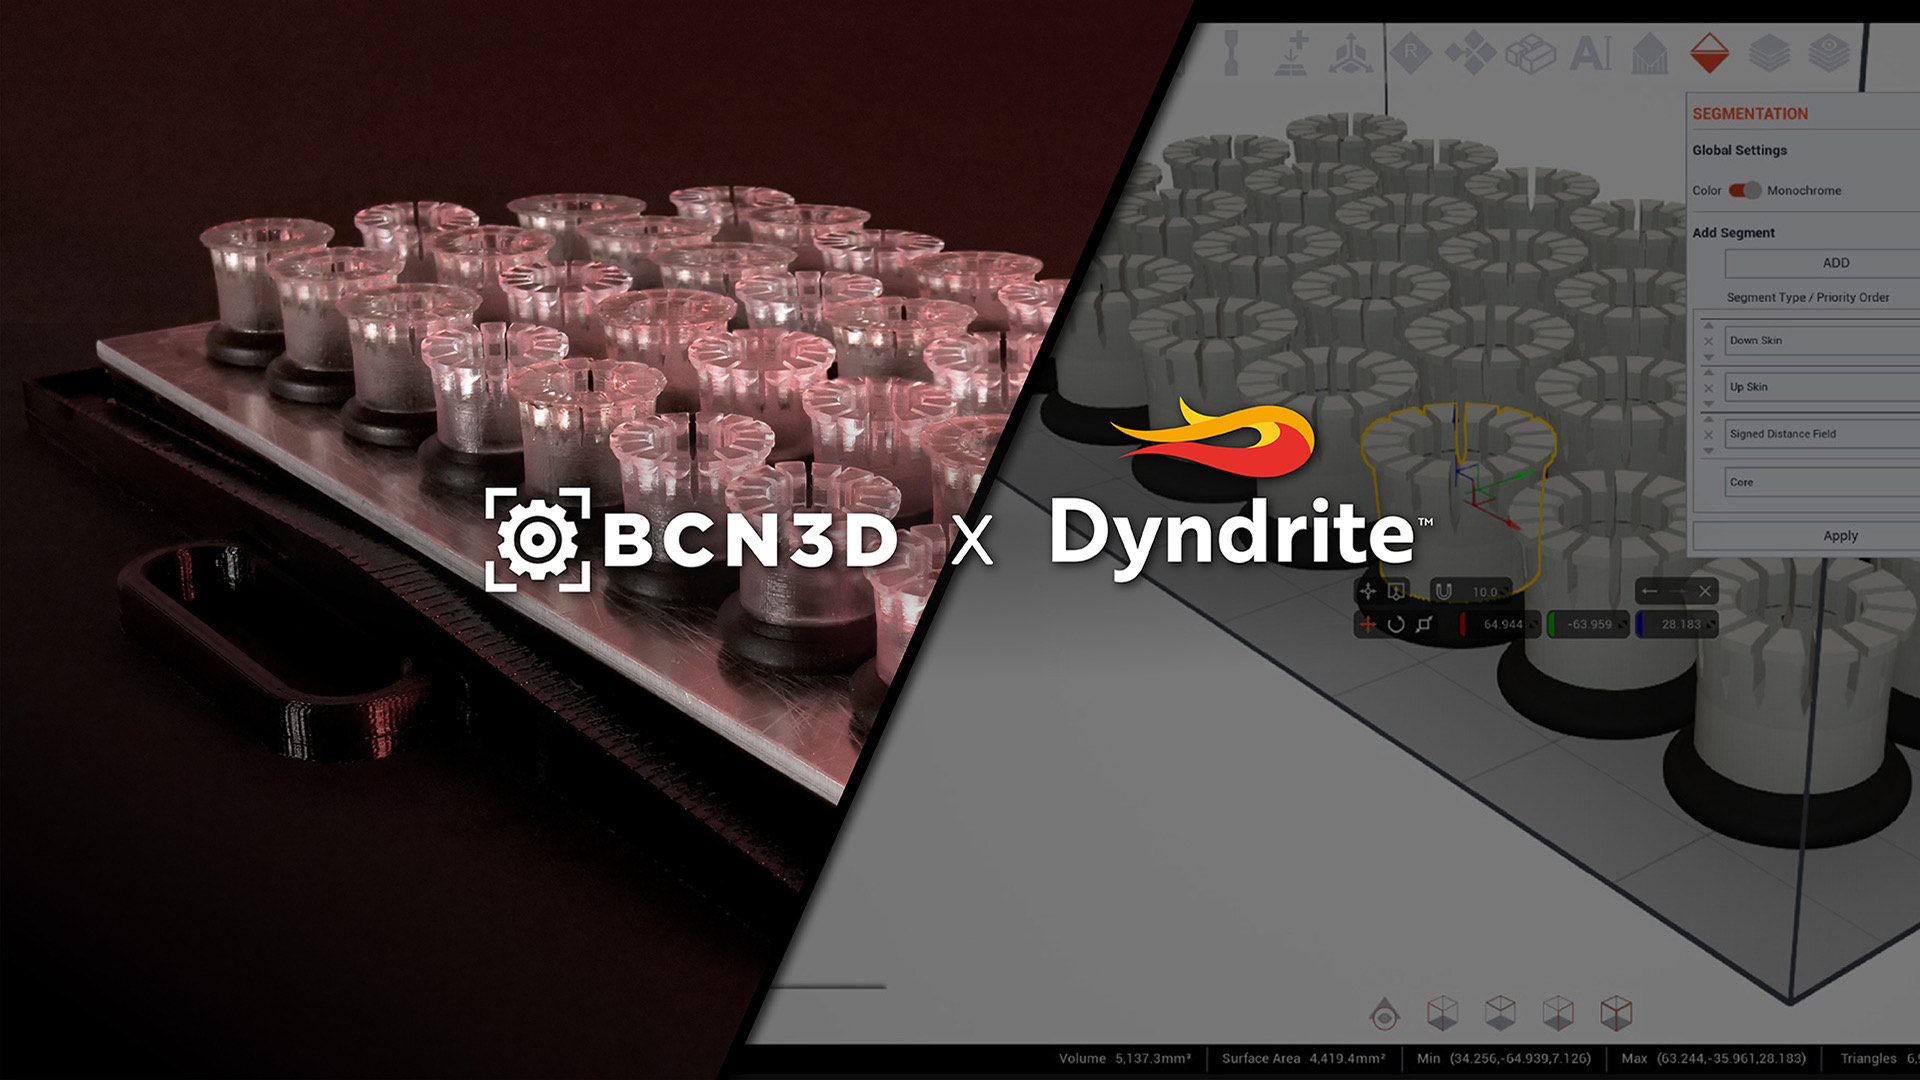 BCN3D_Dyndrite_VLM_Software_Slicer_3D_printing_partnership